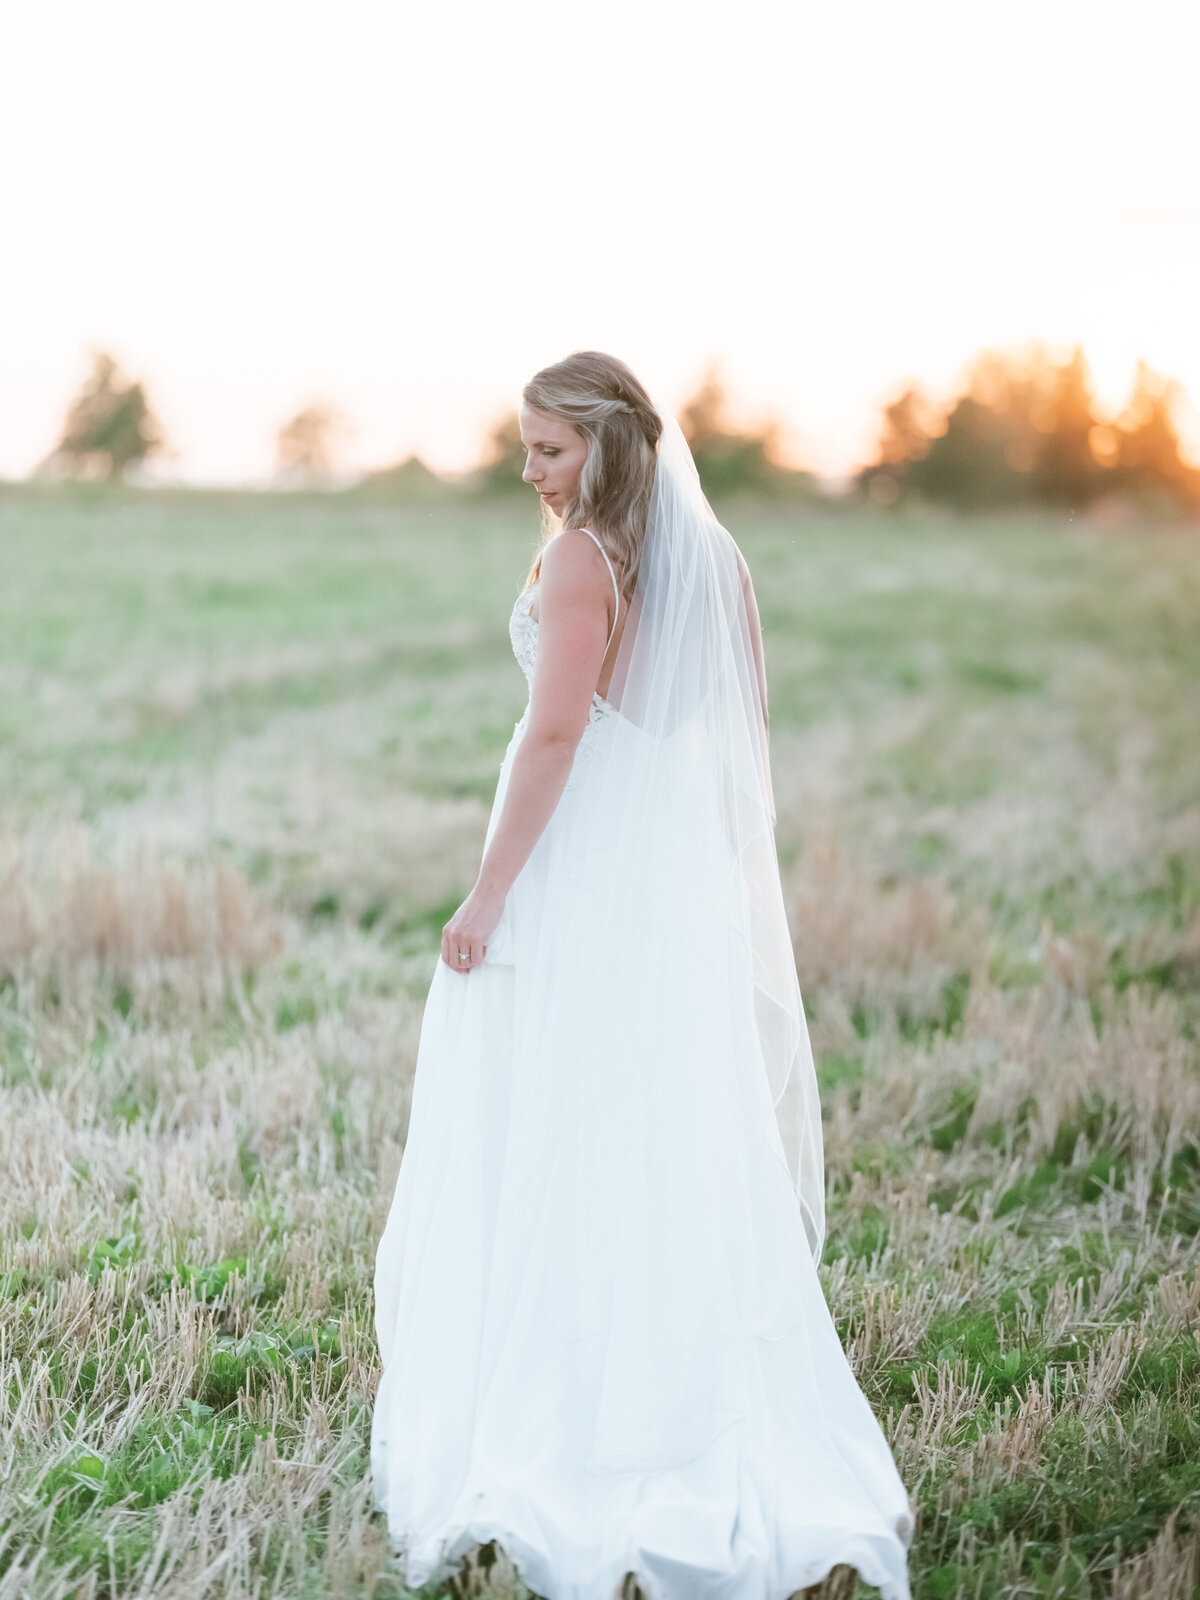 Jacqueline Anne Photography - Halifax Wedding Photographer - Samantha and Greg-568